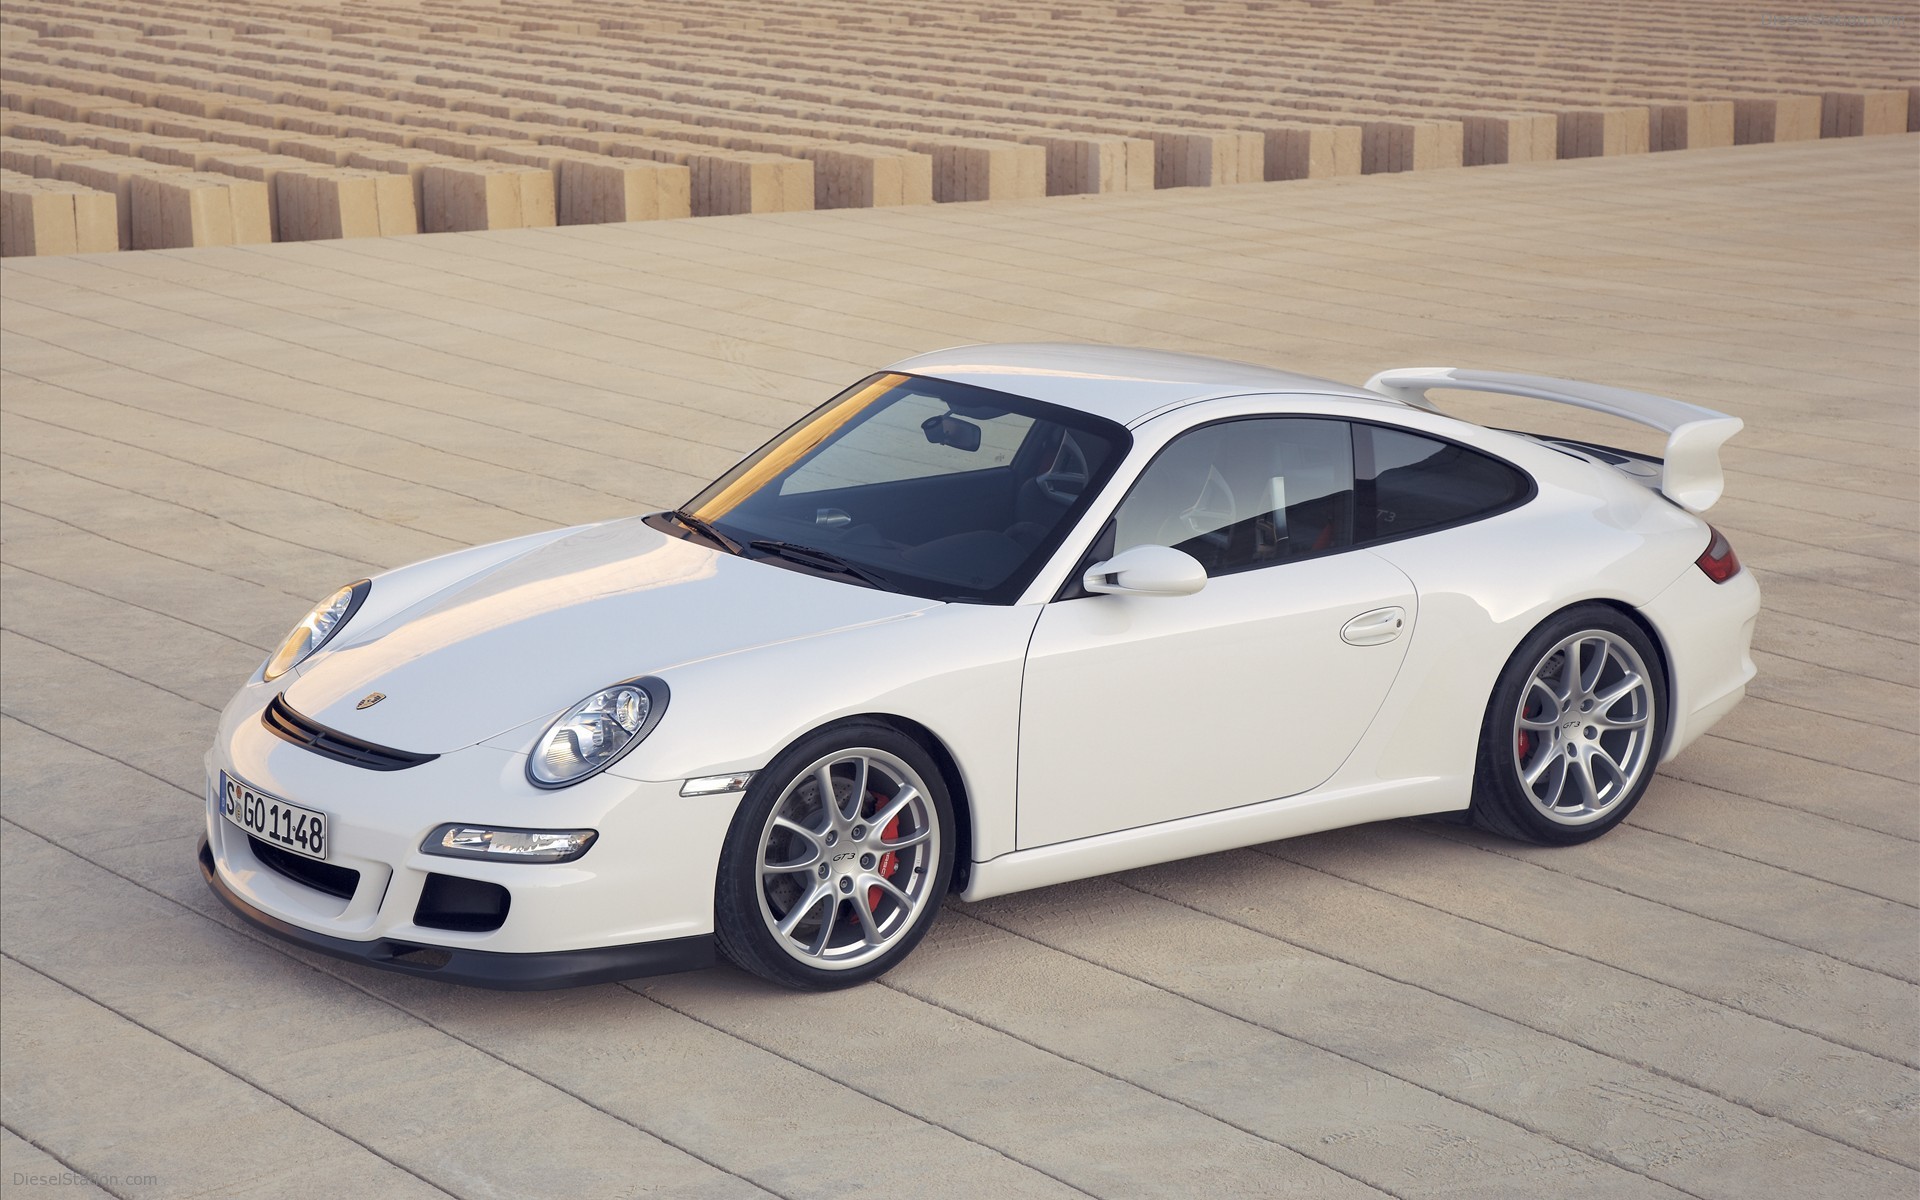 Porsche GT3 Pictures